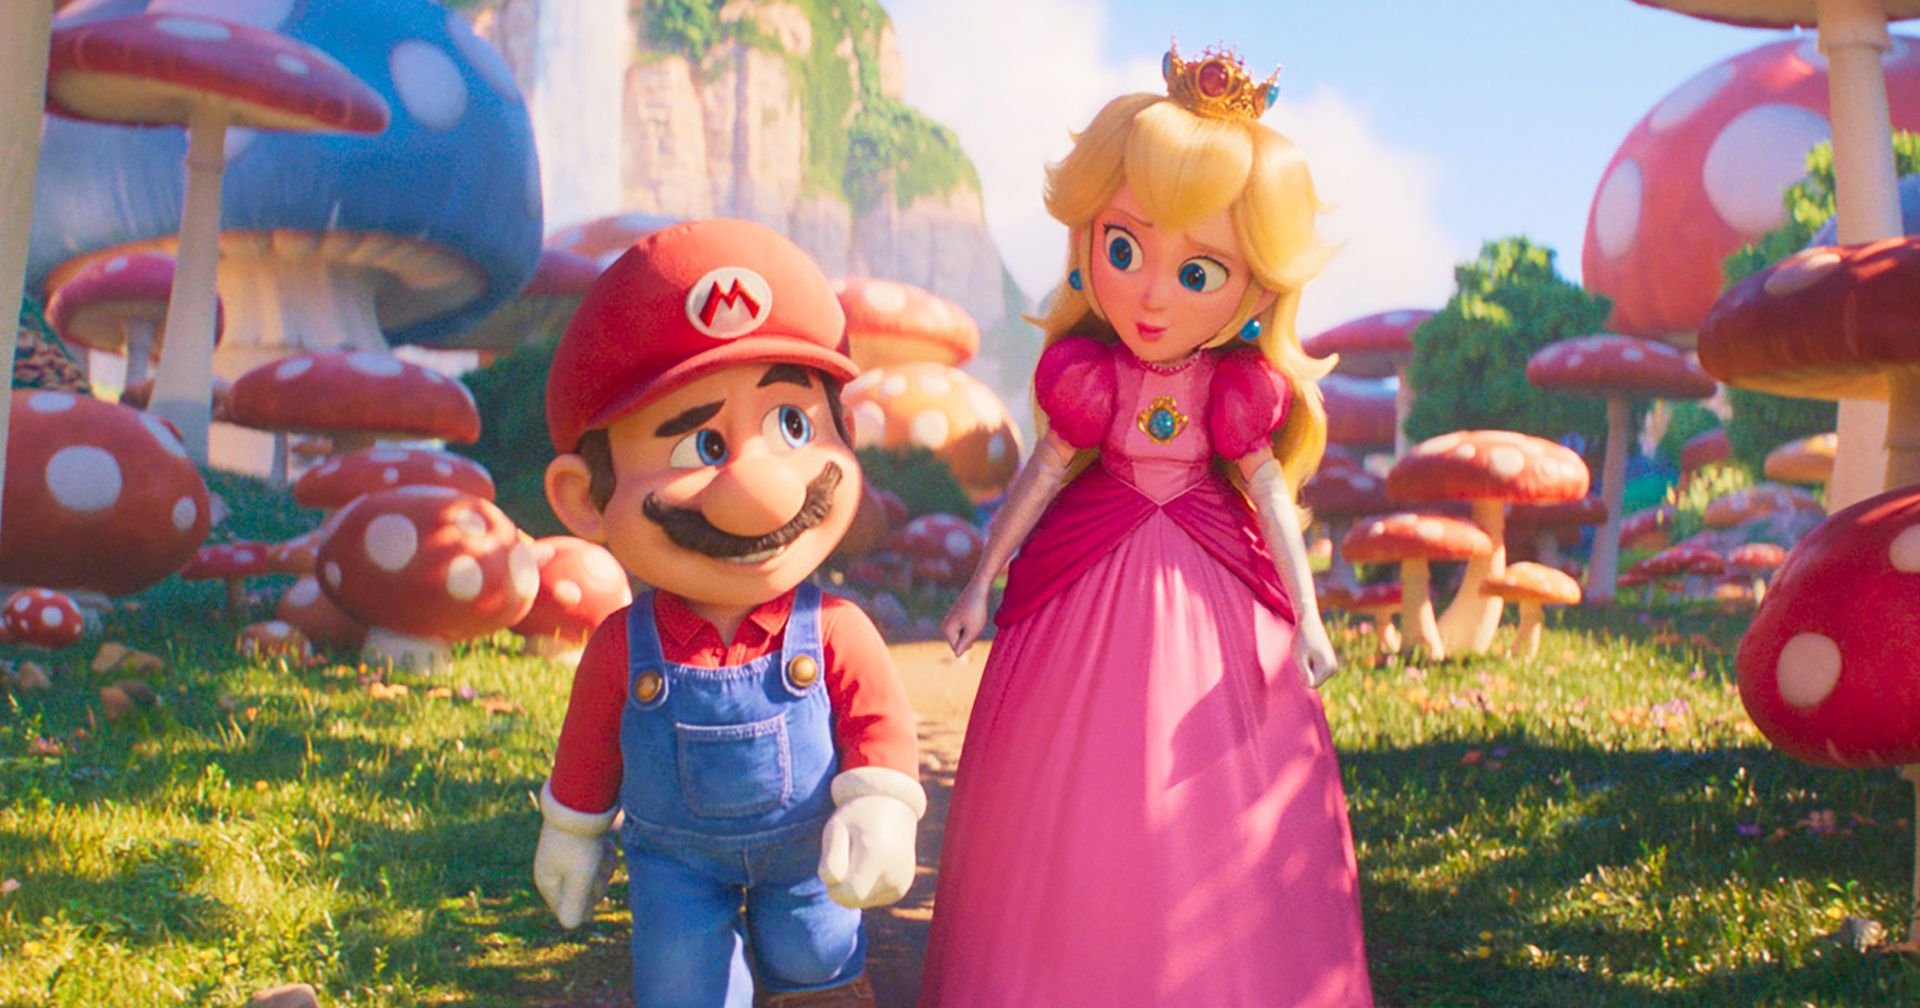 ‘The Super Mario Bros. Movie’ ทำสถิติเปิดตัวสูงสุดในปีนี้ และเป็นแอนิเมชันเปิดตัวสูงสุดตลอดกาล